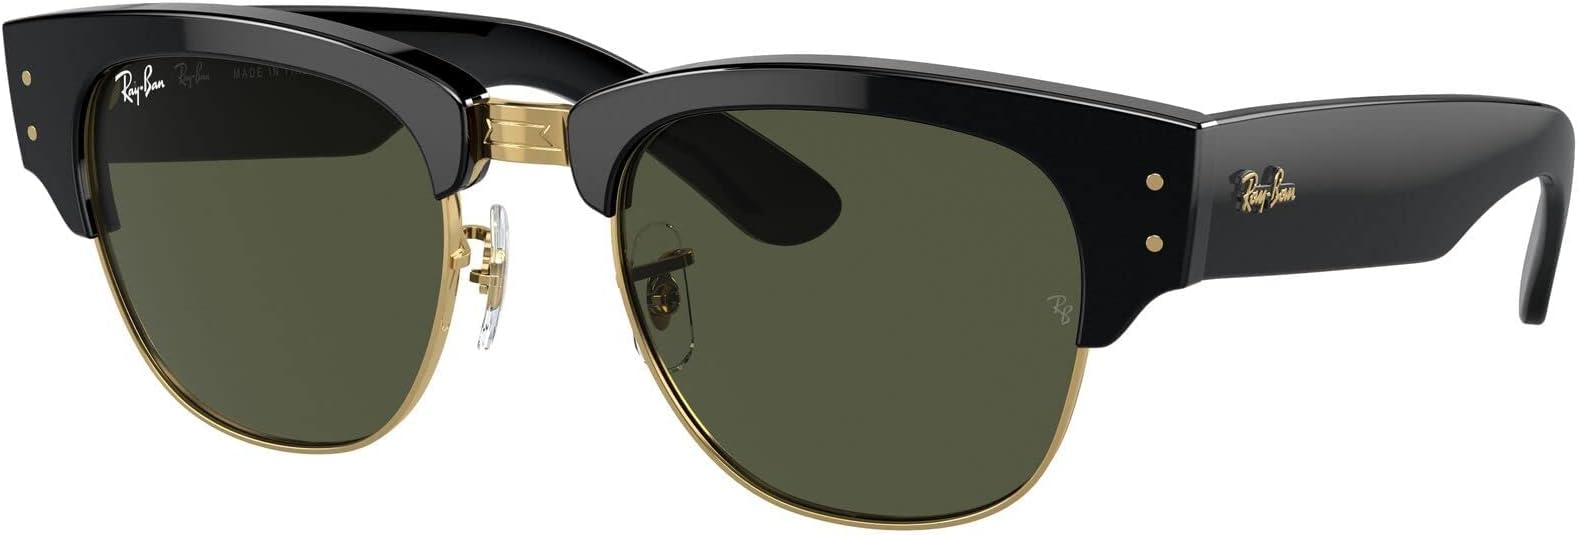 Солнцезащитные очки 53 mm 0RB0316S Mega Clubmaster Ray-Ban, цвет Black on Arista/Green